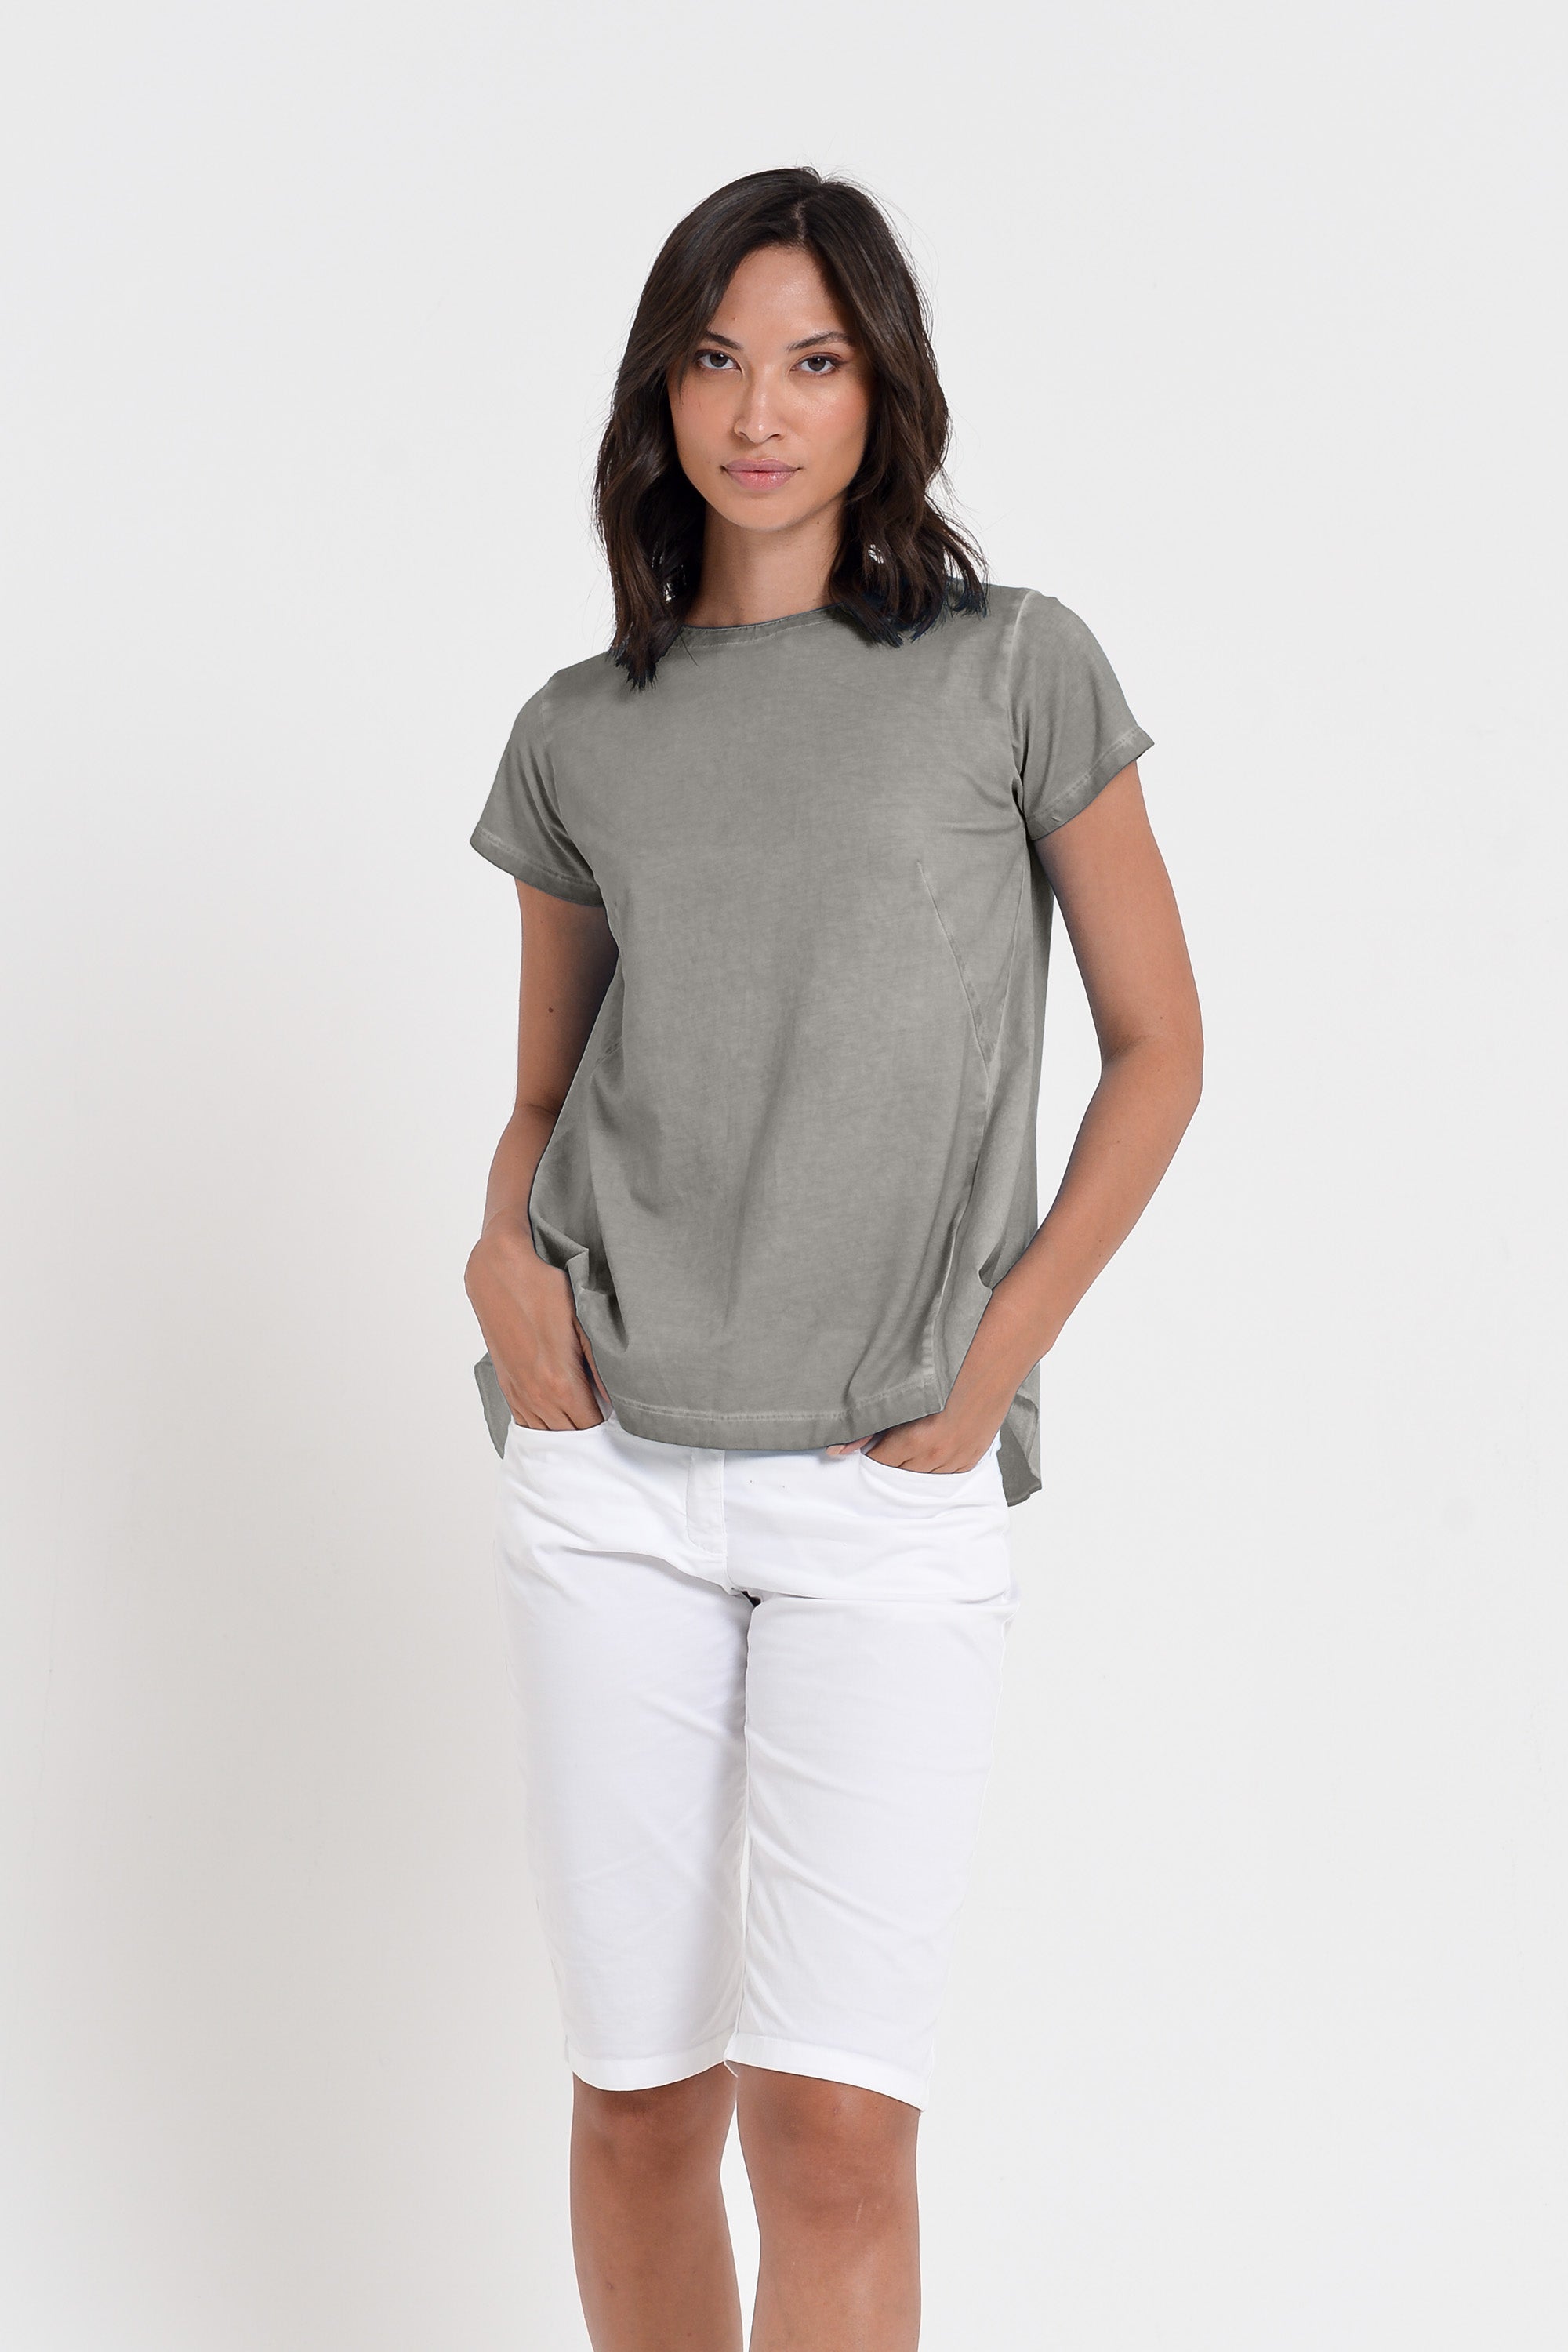 Flashback T-Shirt - Women's Stretchy Cotton T-Shirt - Dolphin